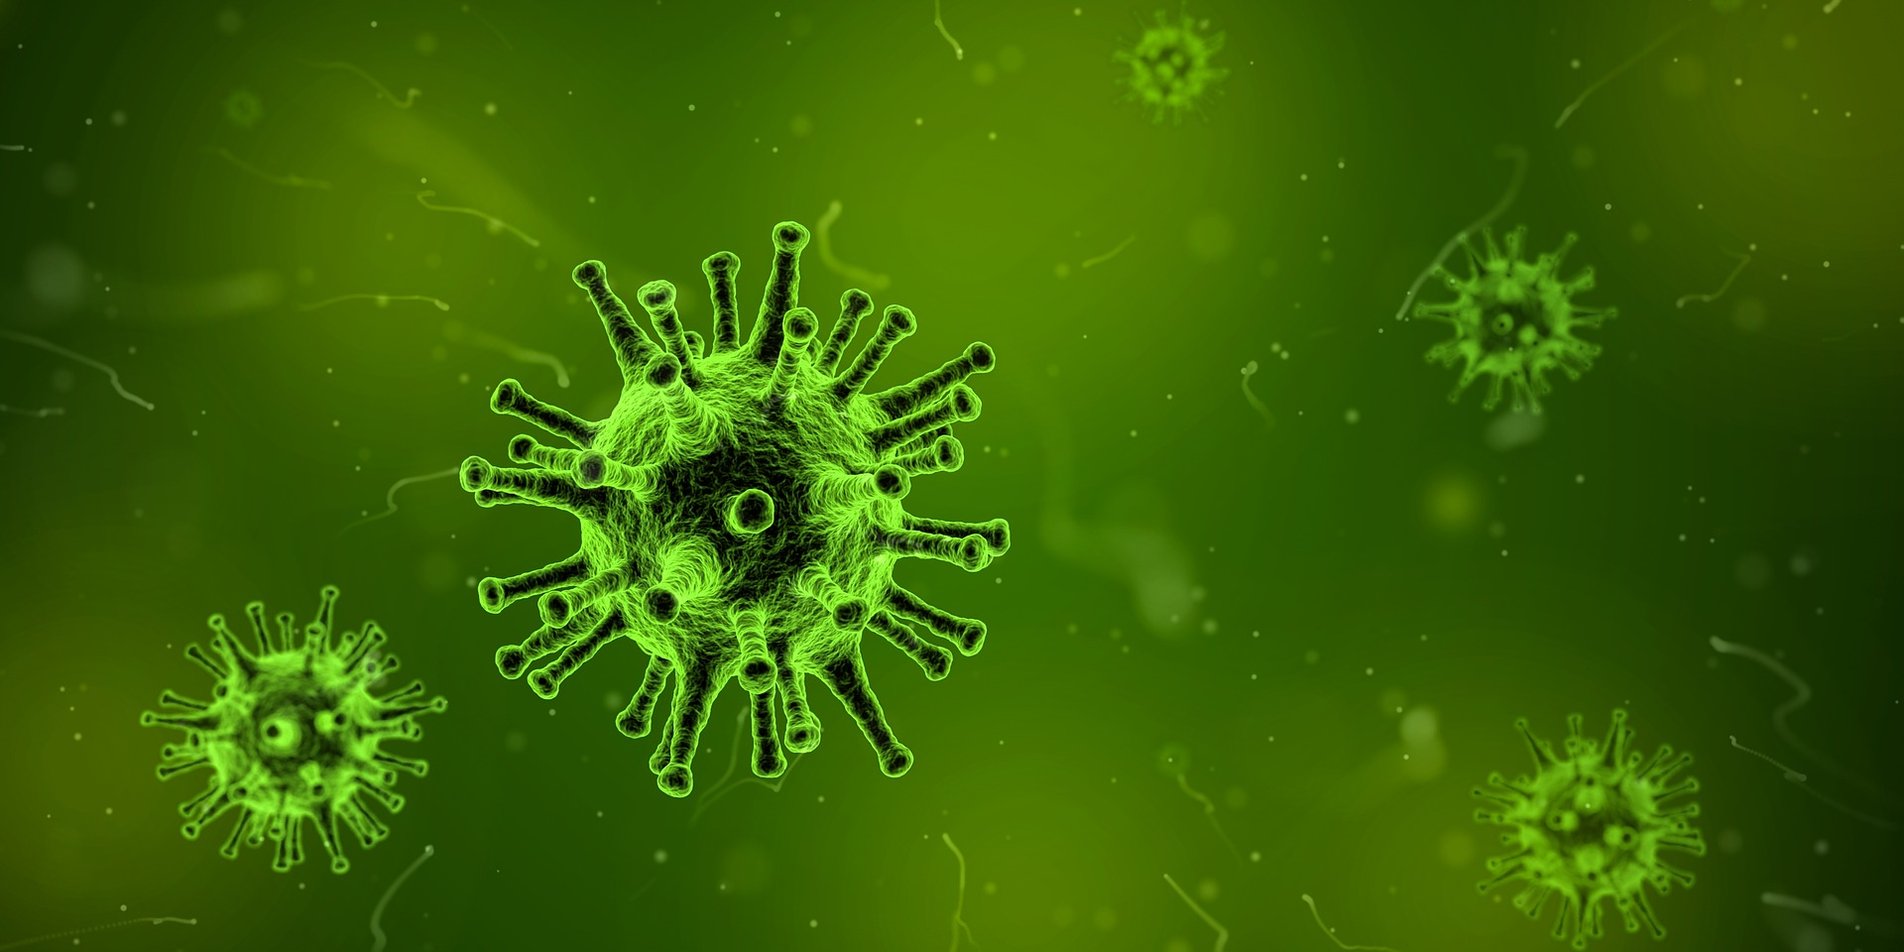 Three Ways to Fight the Flu - Virus Image.jpg